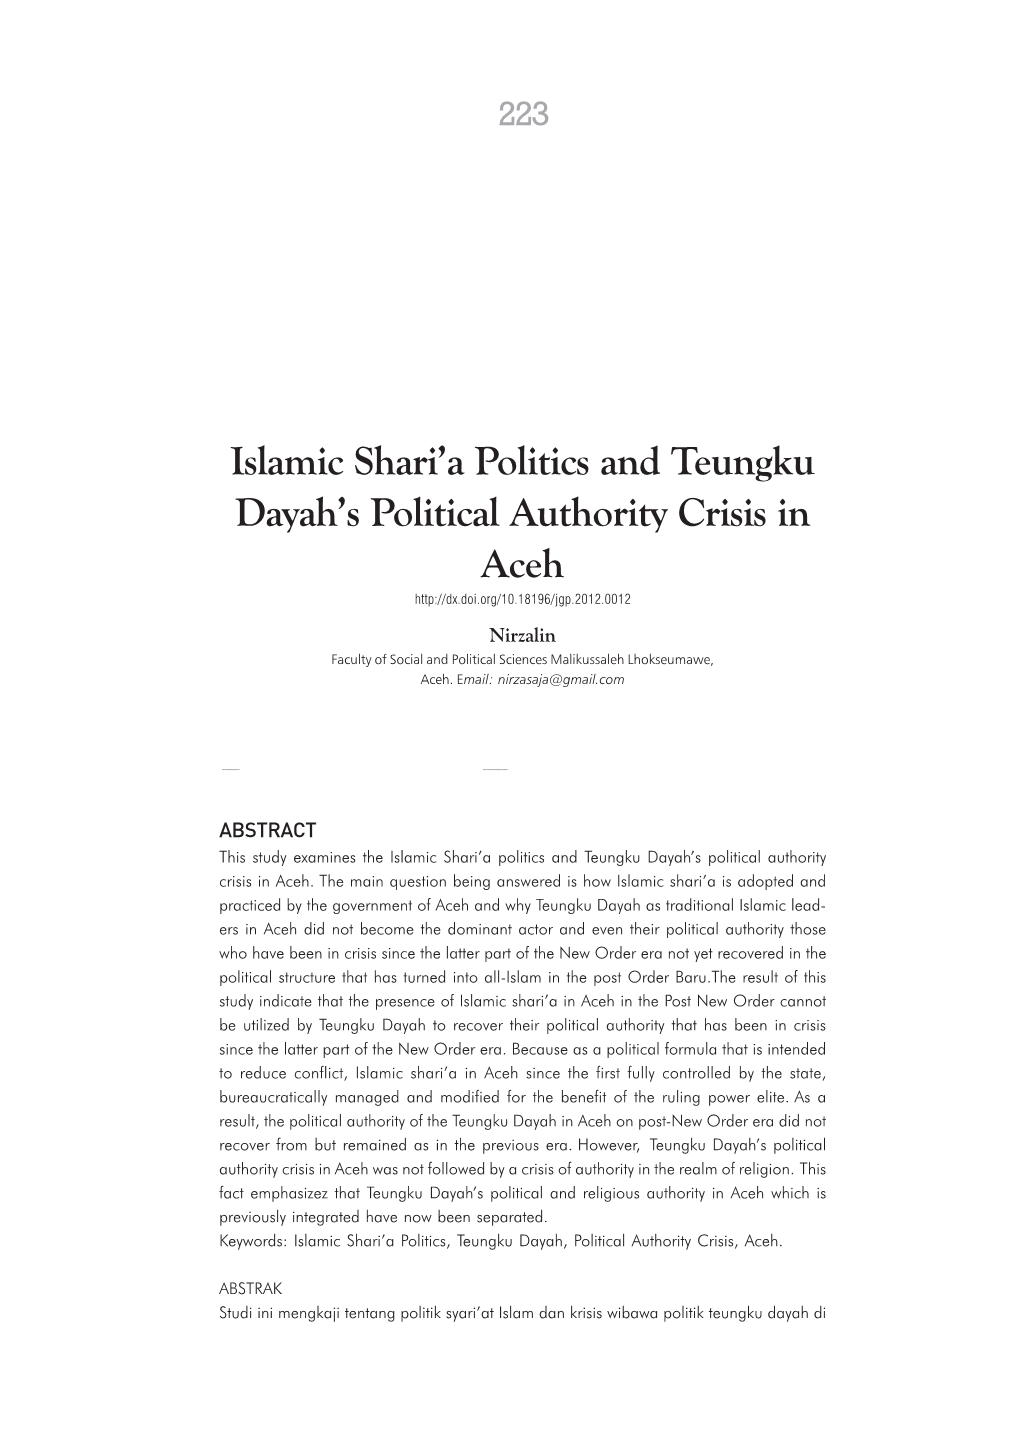 Islamic Shari'a Politics and Teungku Dayah's Political Authority Crisis In